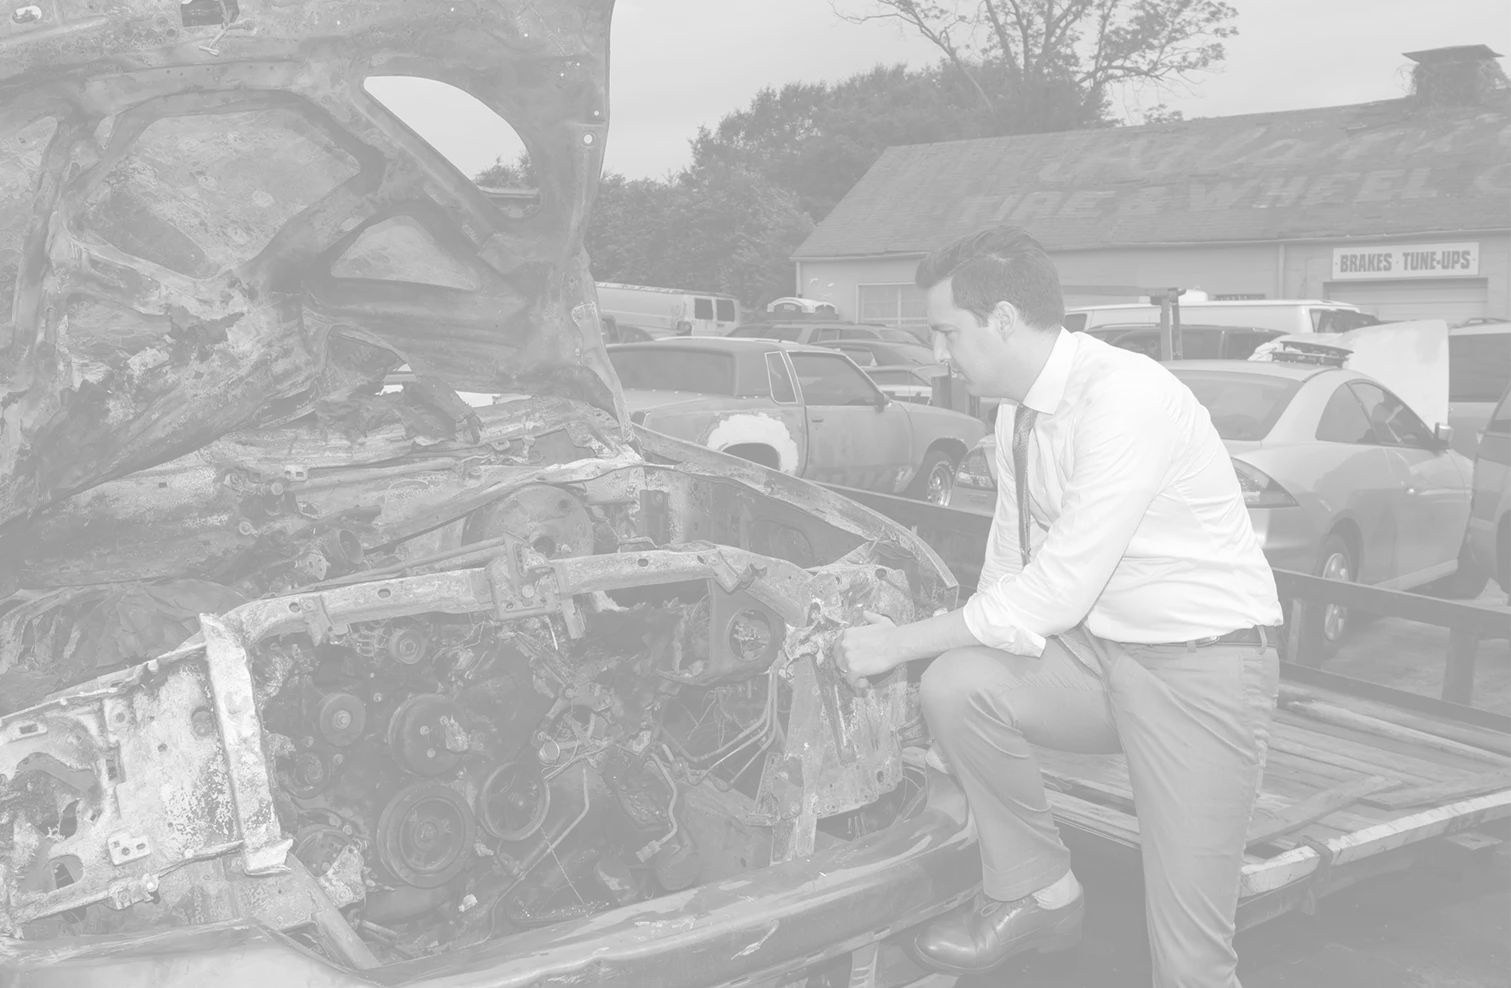 Matt inspecting wrecked vehicle